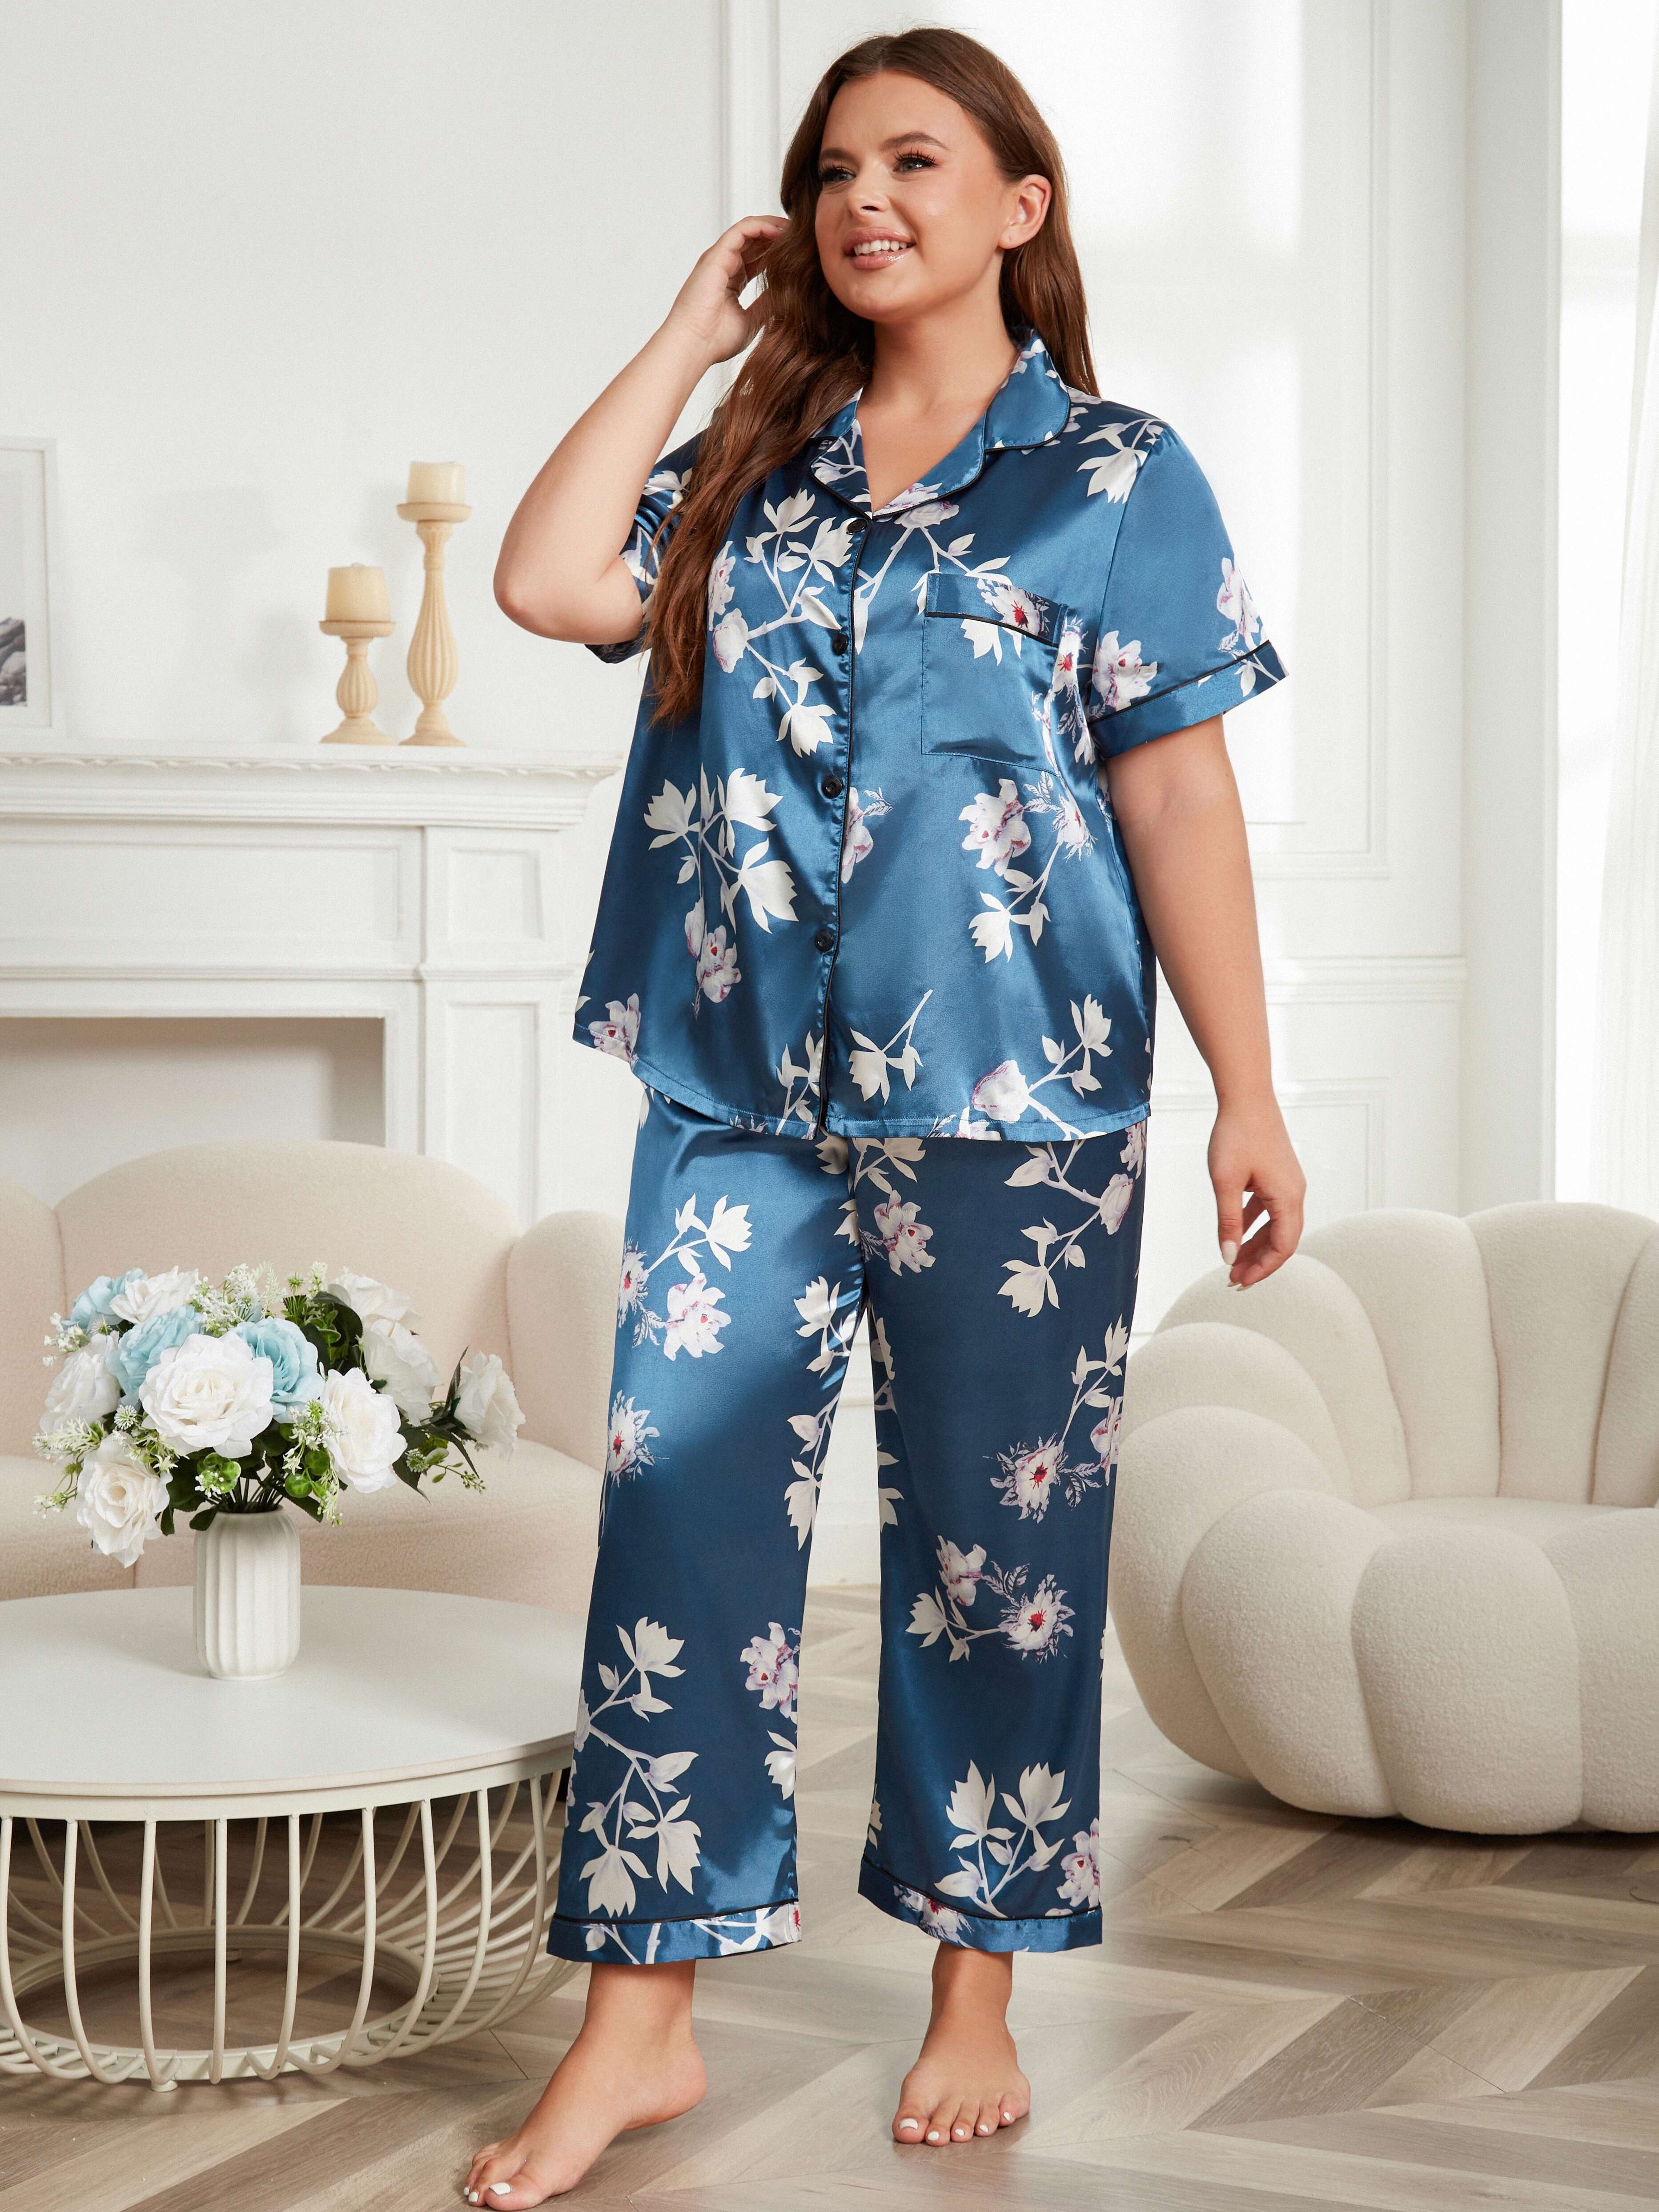 Shop Generic Silk Pajamas Plus Size Women Solid Cute Pajamas for